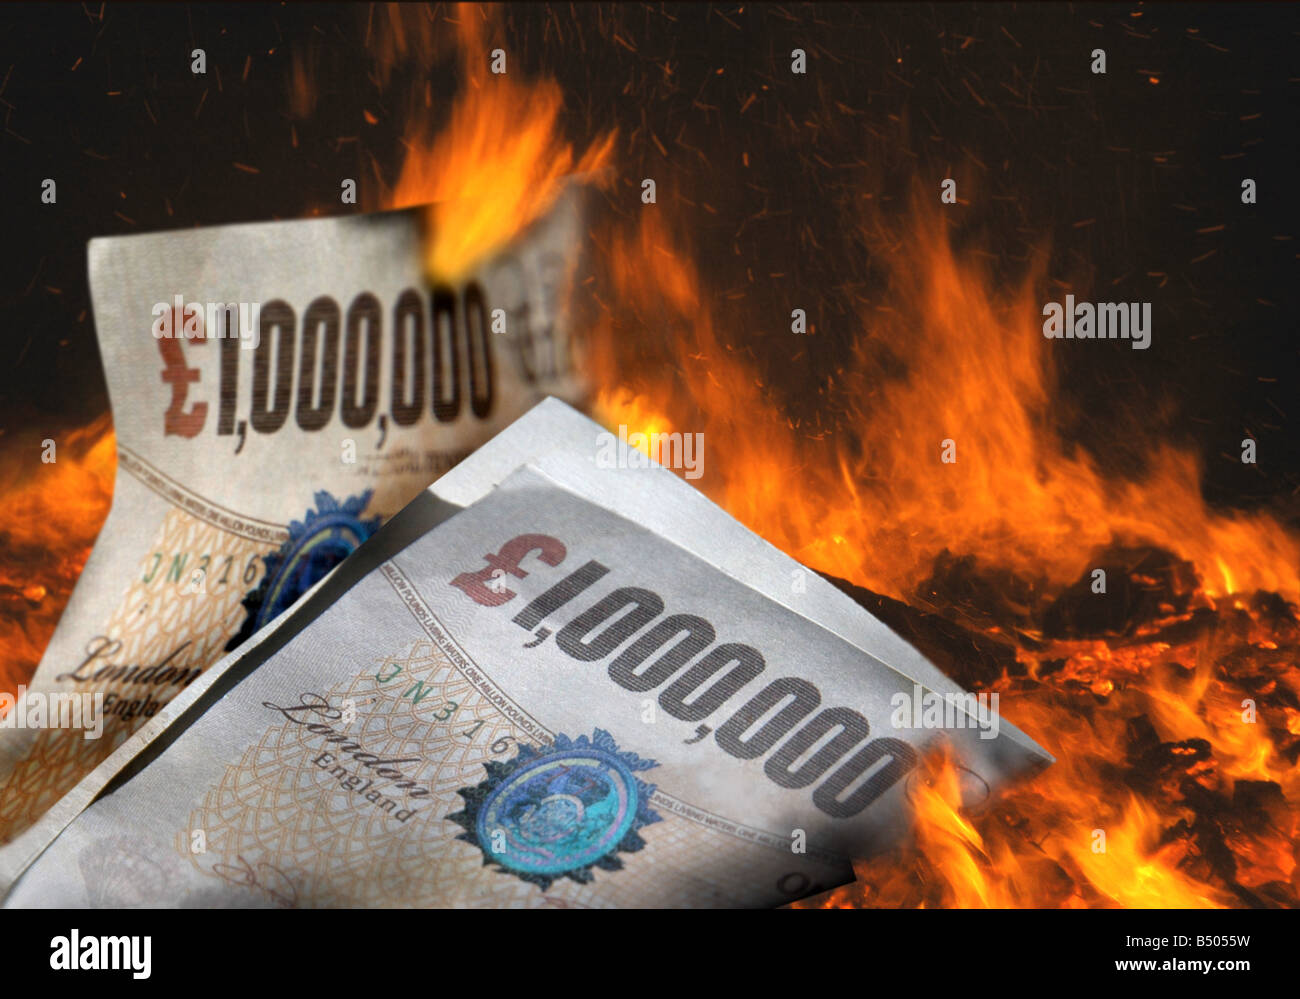 Fake million pound notes burning in a bonfire. Stock Photo